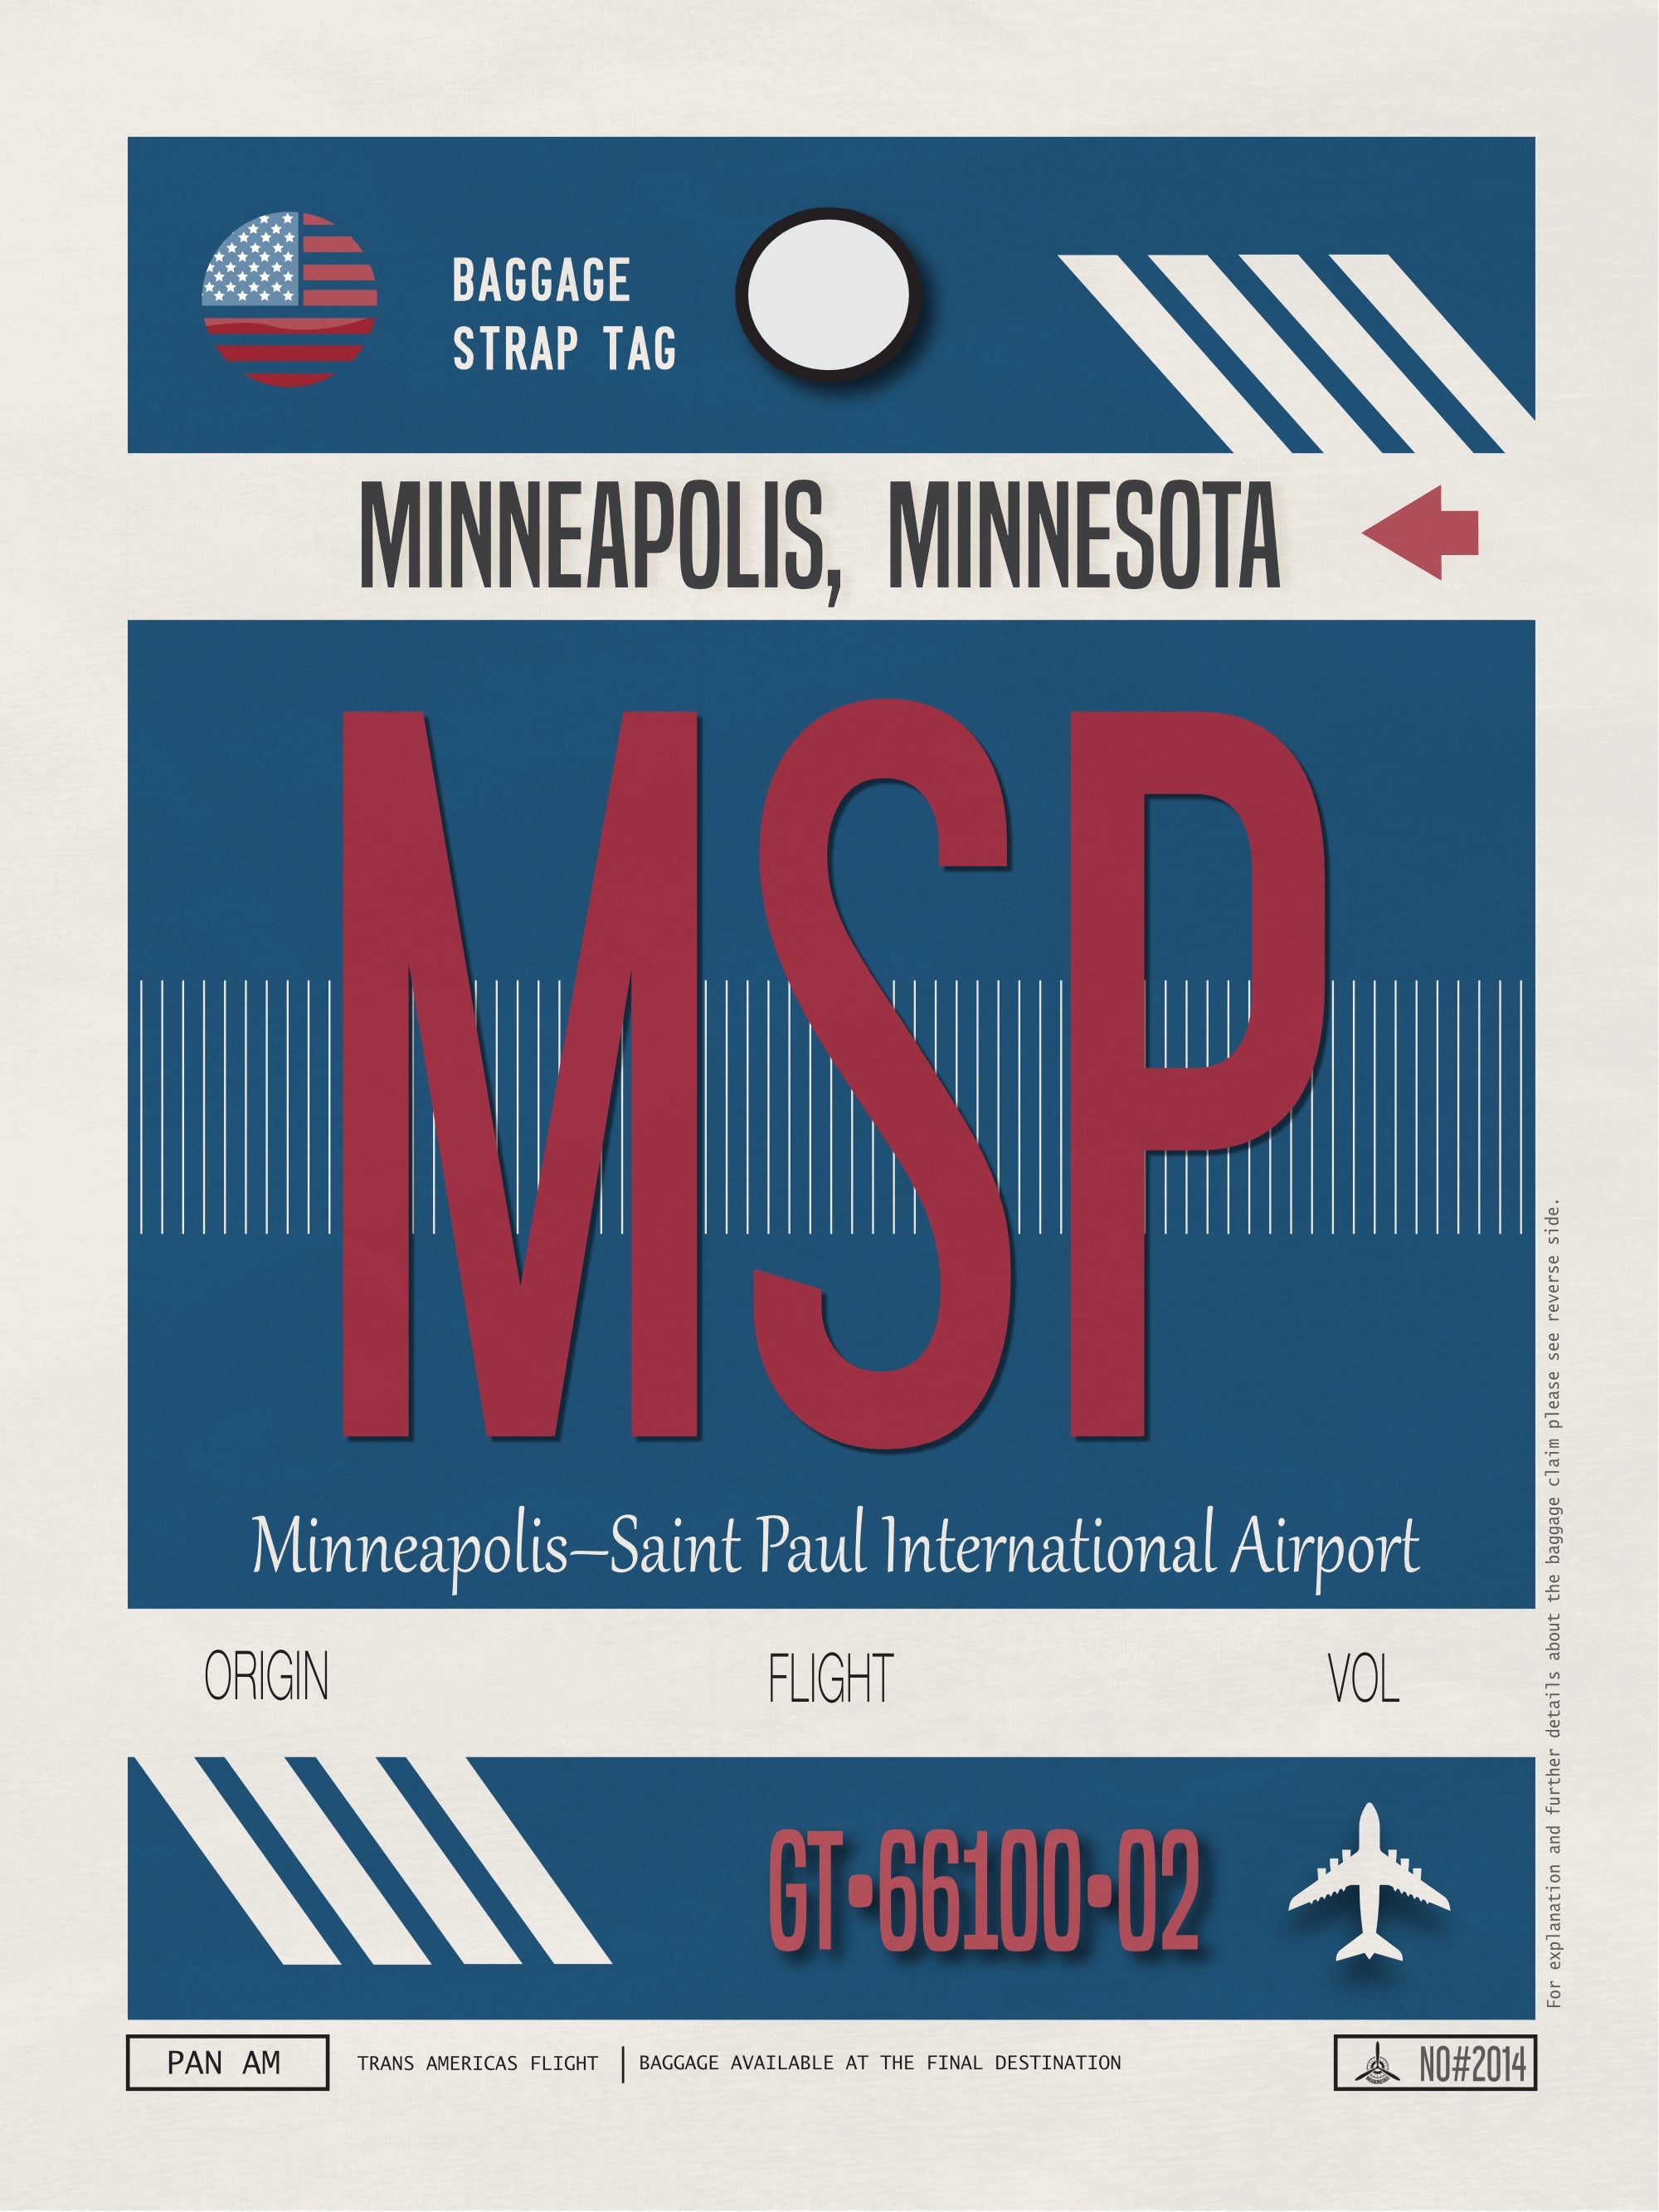 Minneapolis, Minnesota USA - MSP Airport Code Poster